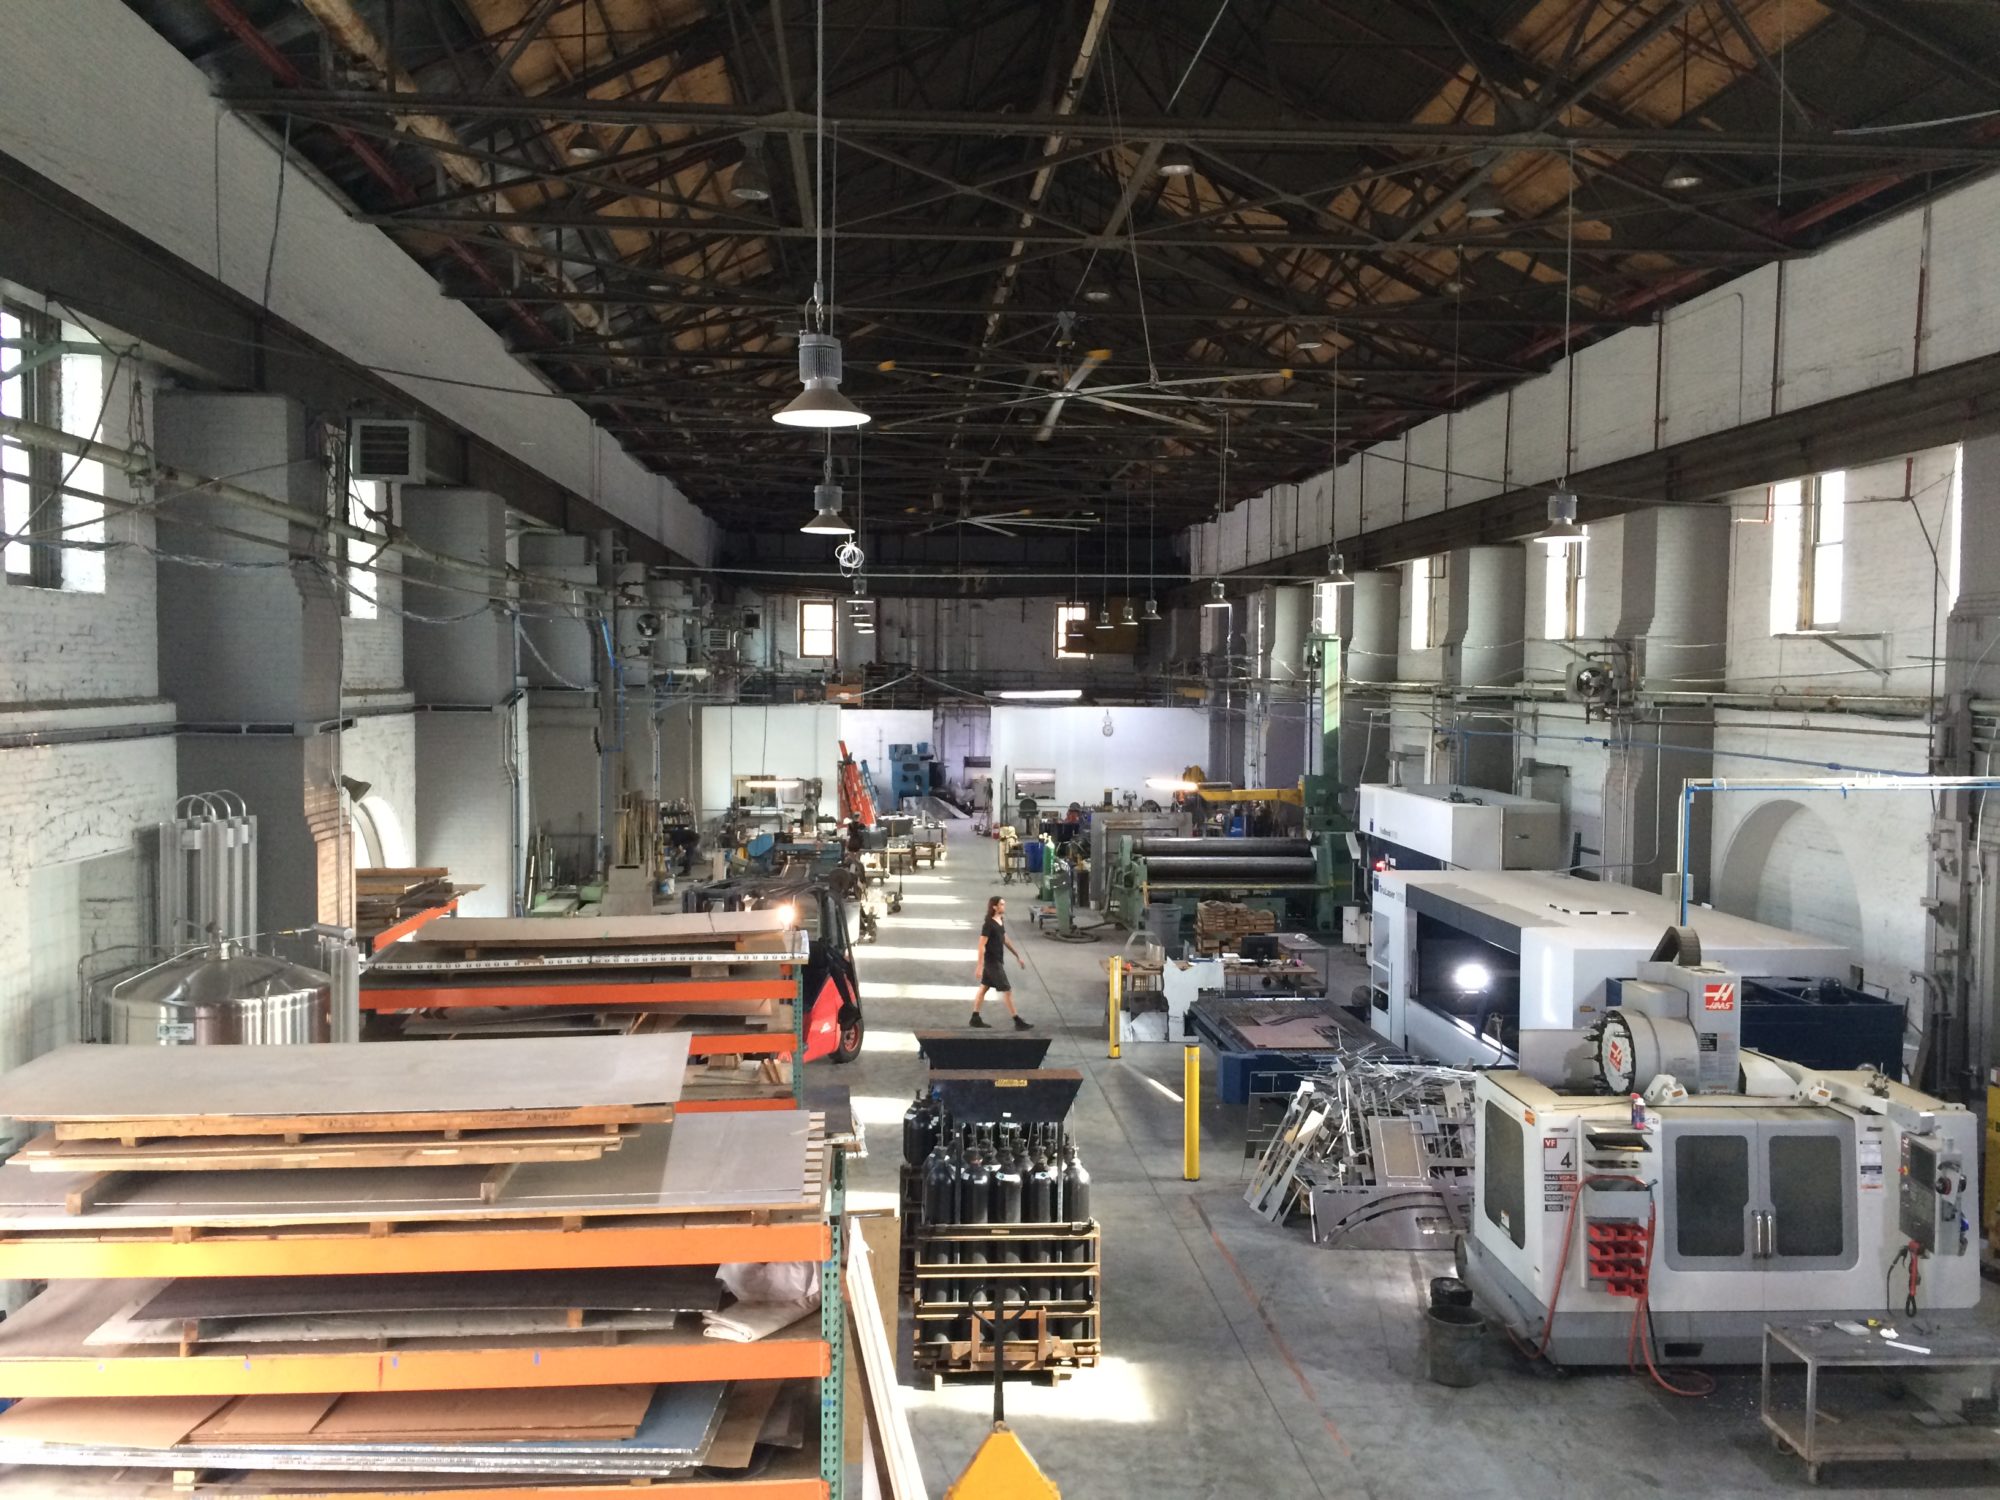 Ferra Designs metal design and fabrication workshop at the Brooklyn Navy Yard